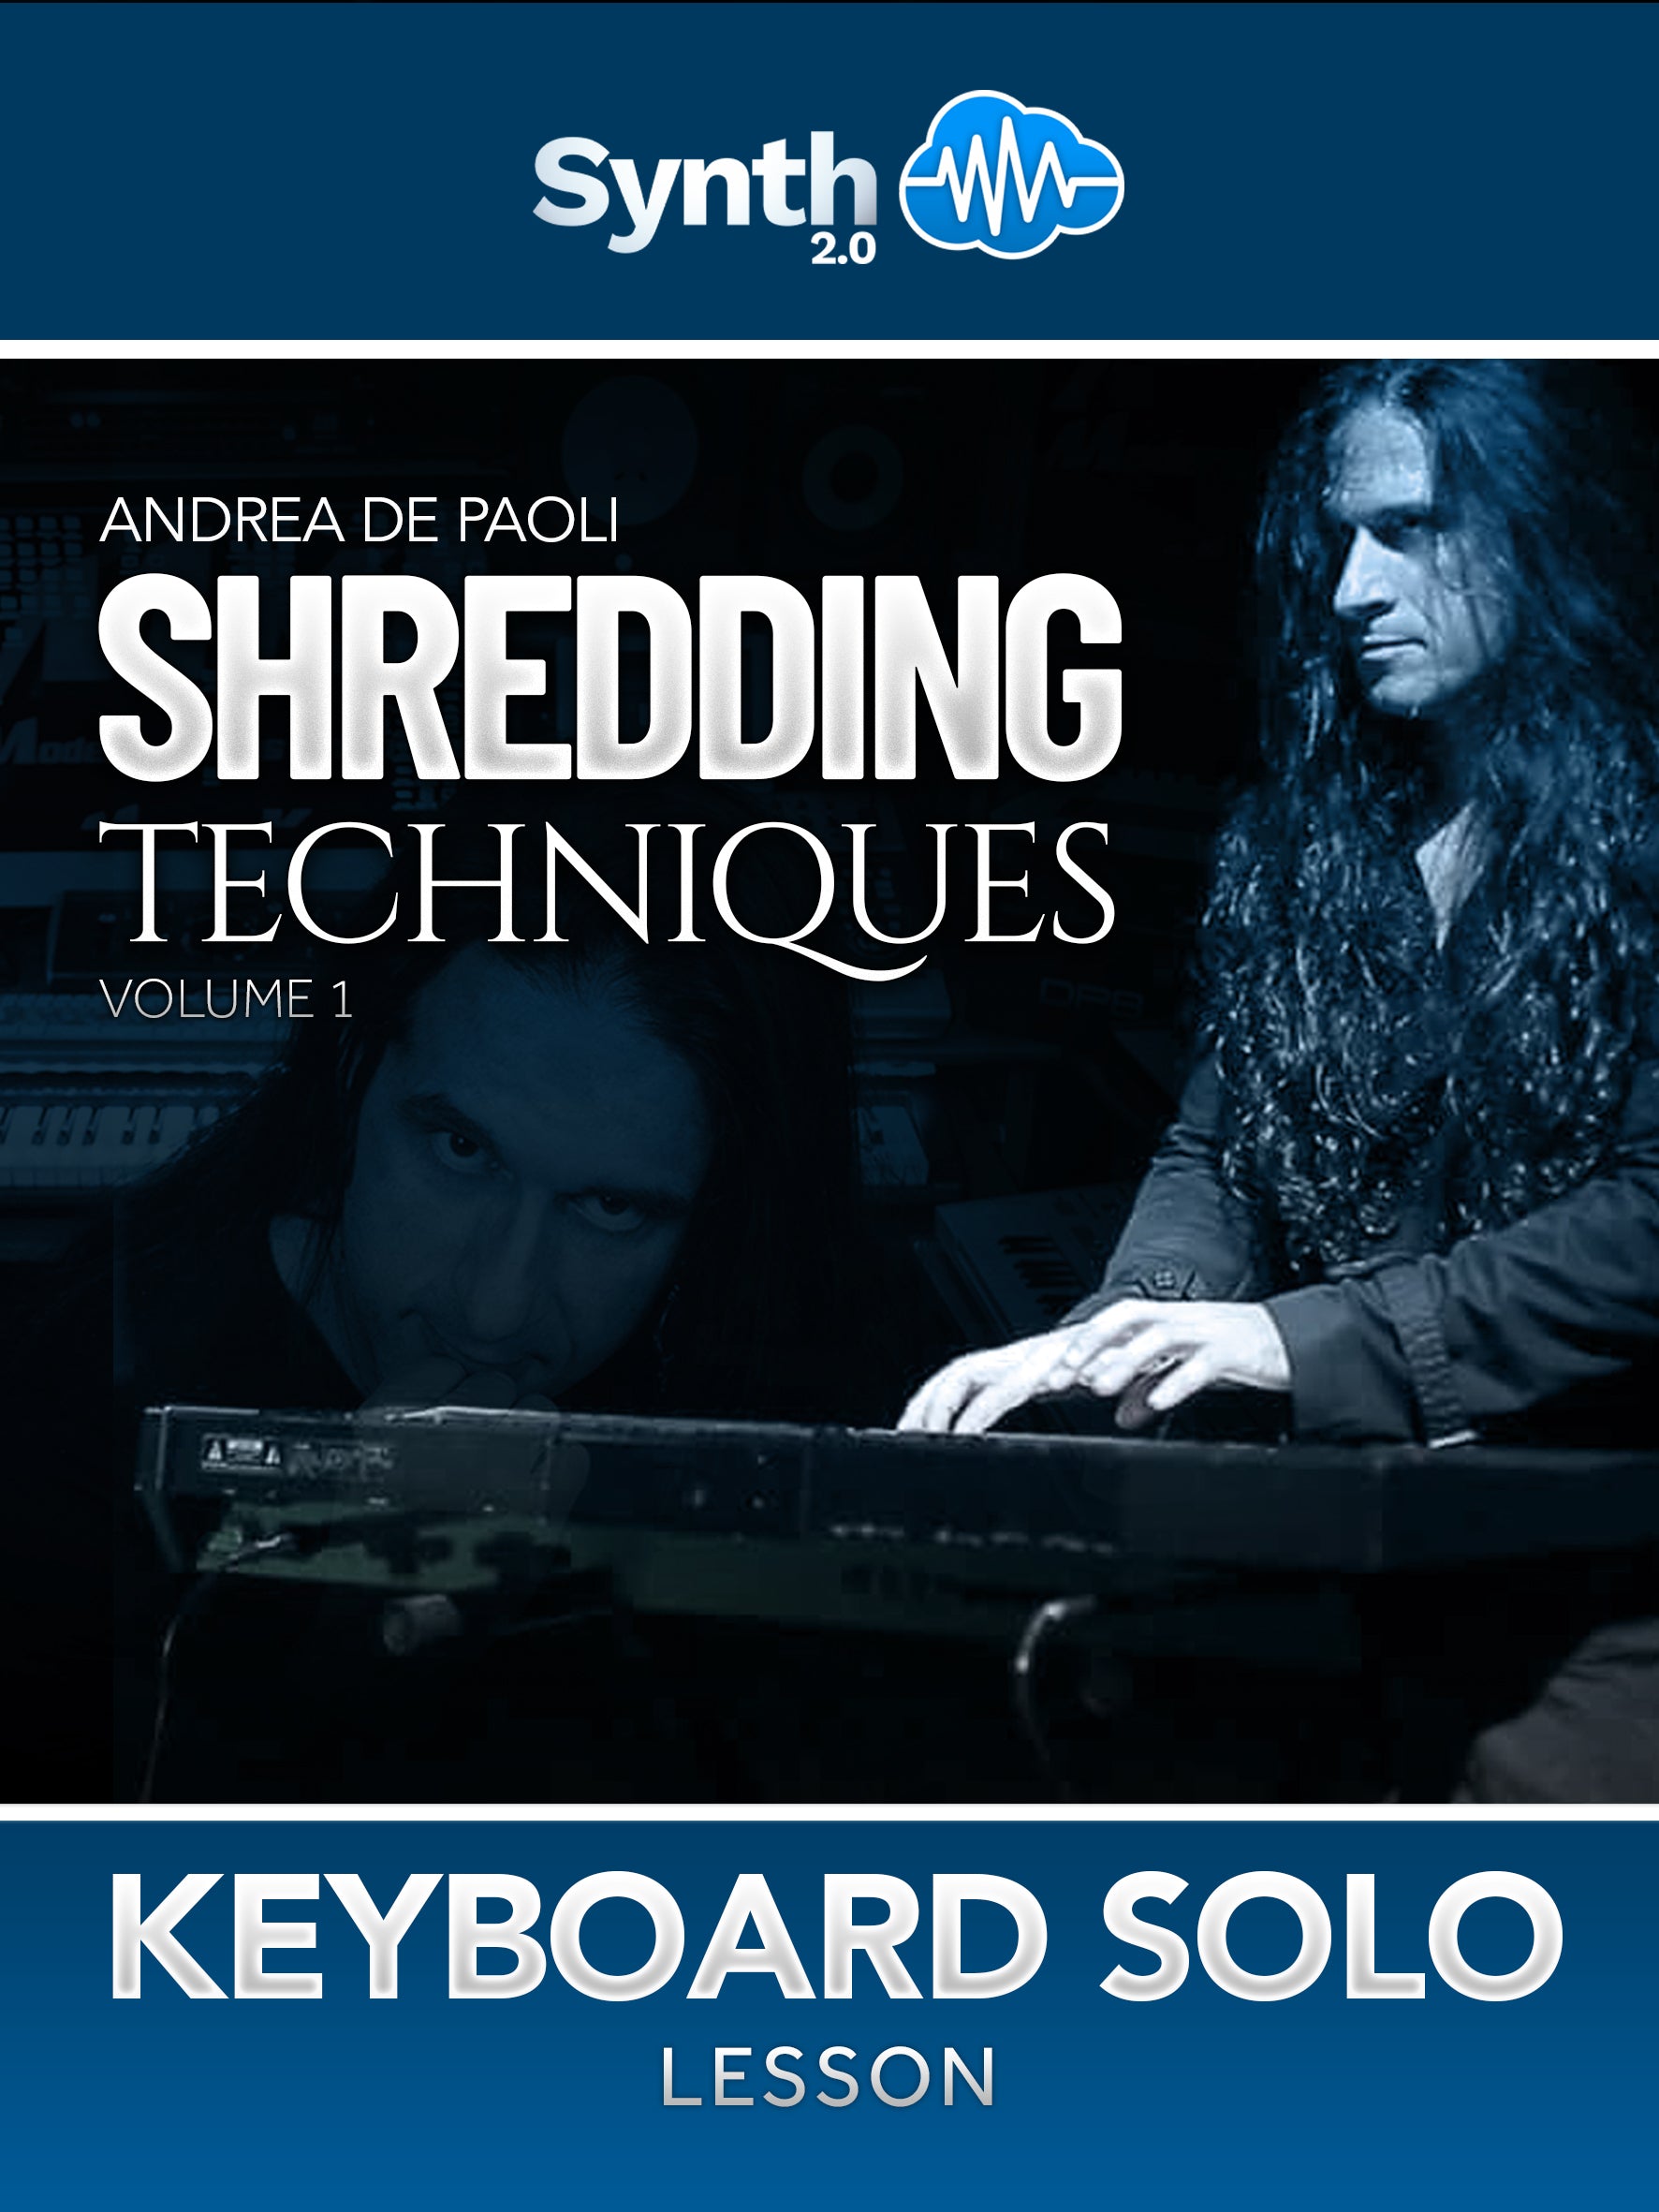 MMI011 - Keyboard Solo Lessons V1 - Shredding Techniques